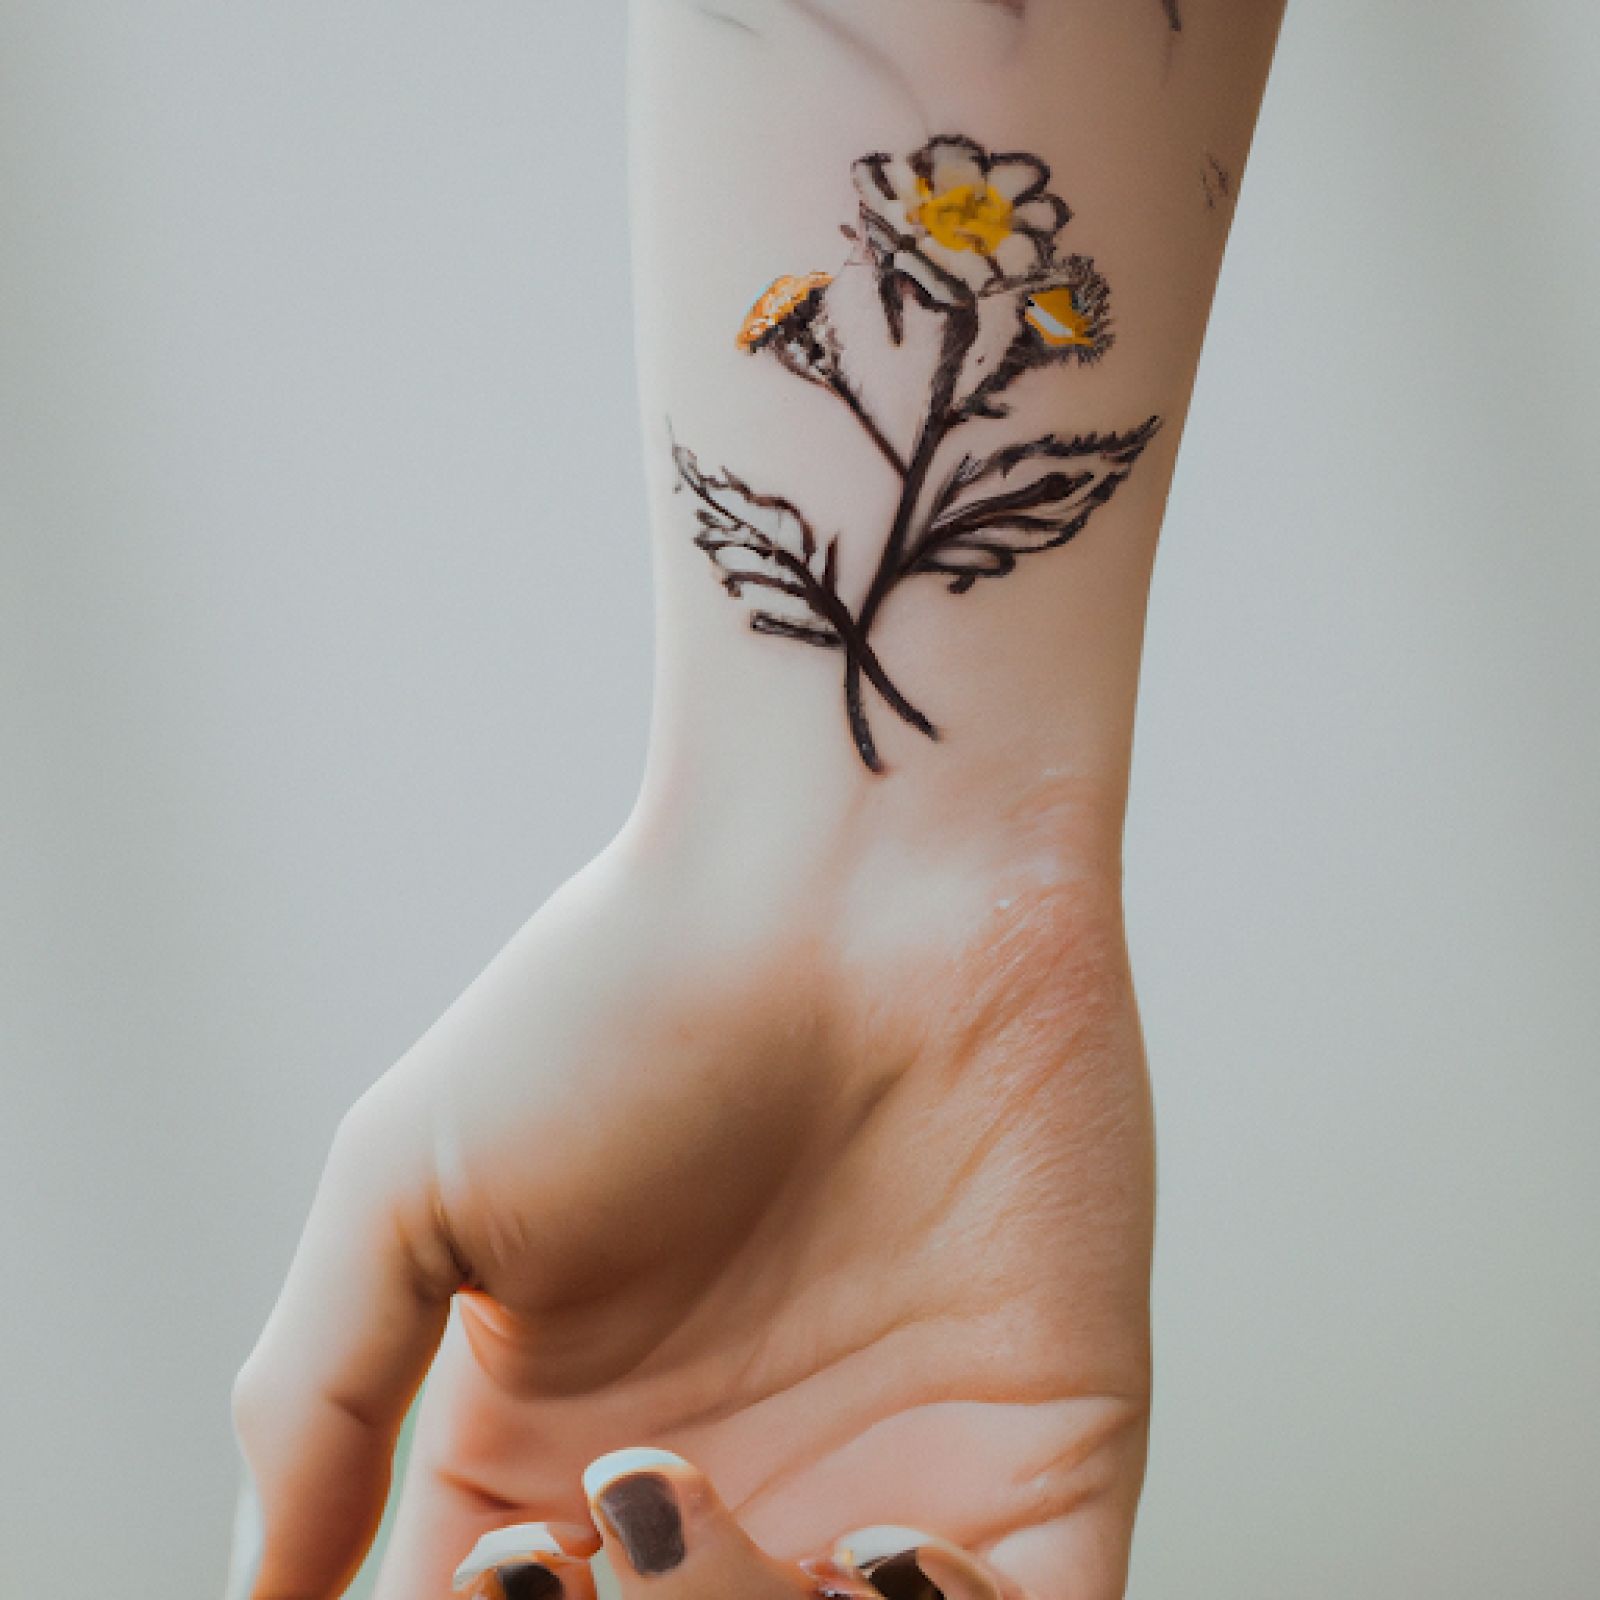 Flower tattoo on hand for women